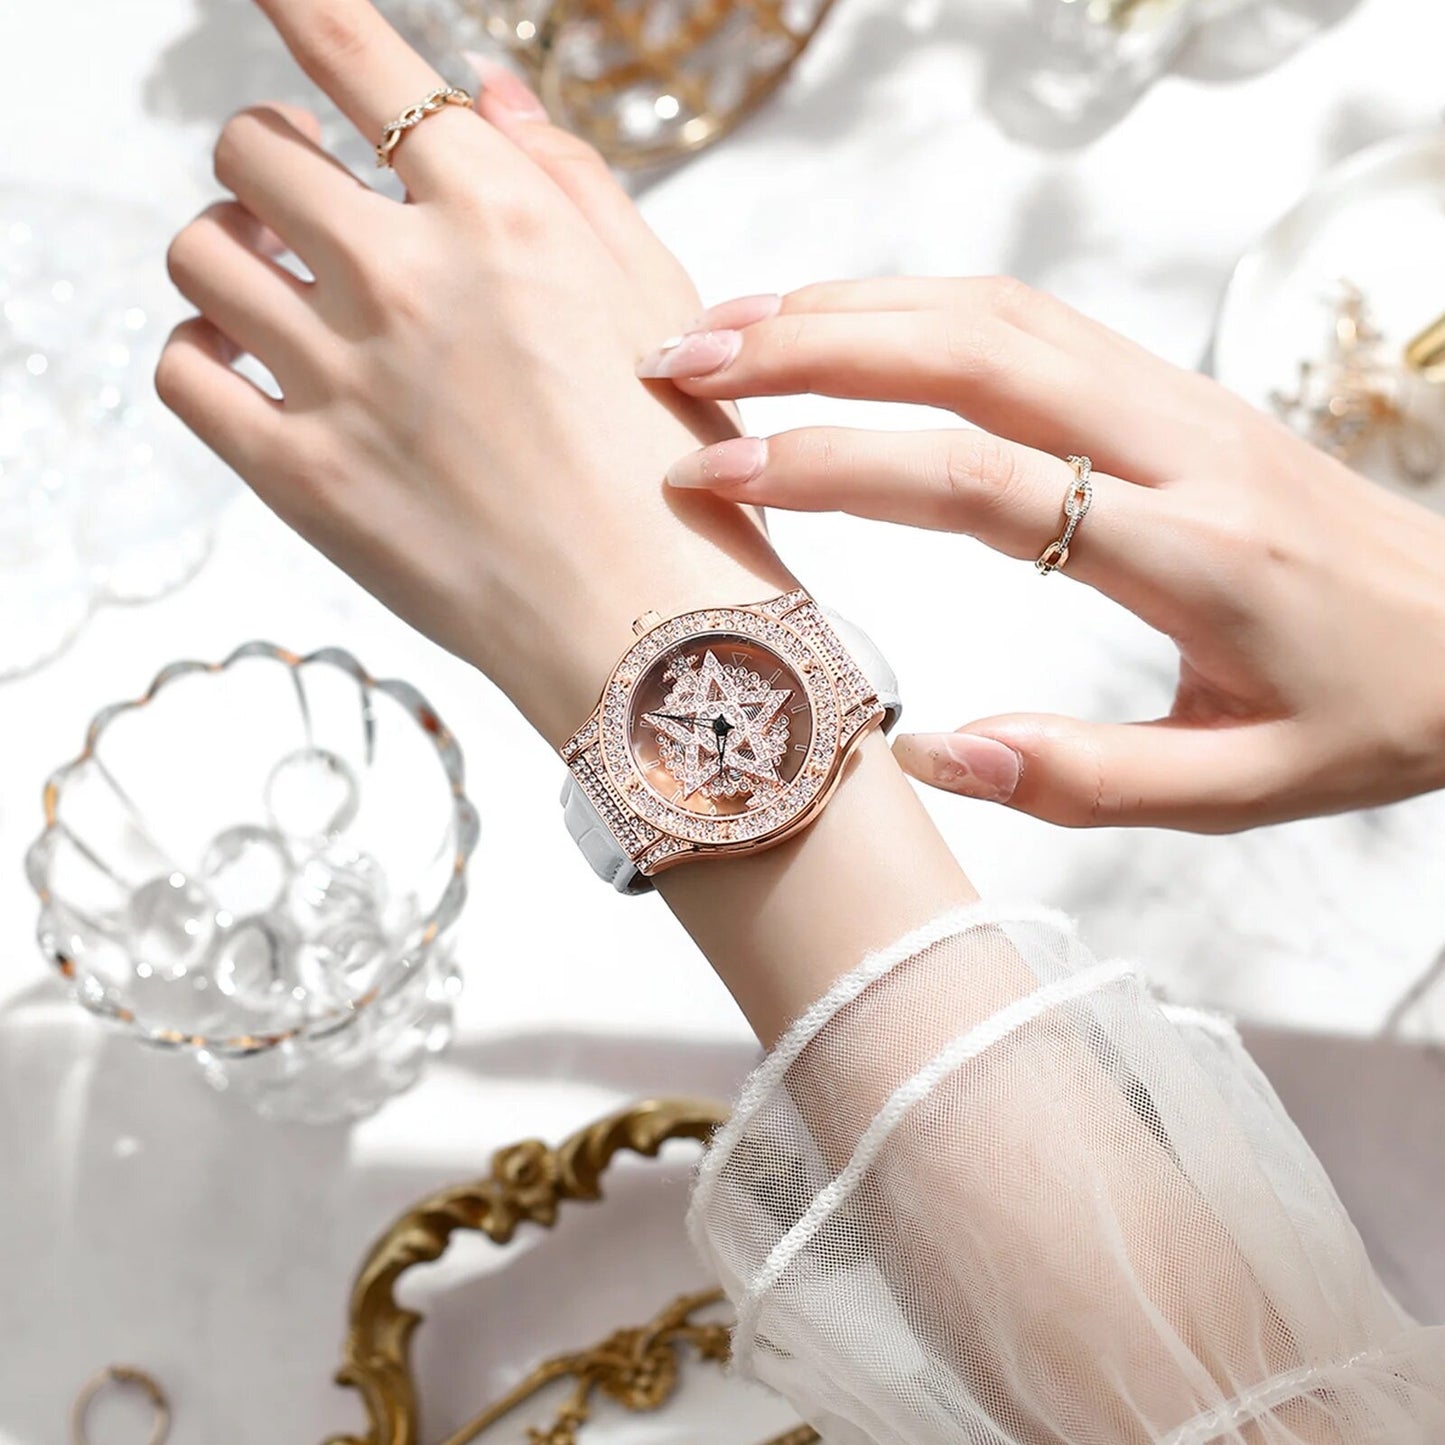 eXtri Diamond Pentacle Revolving Wristwatch